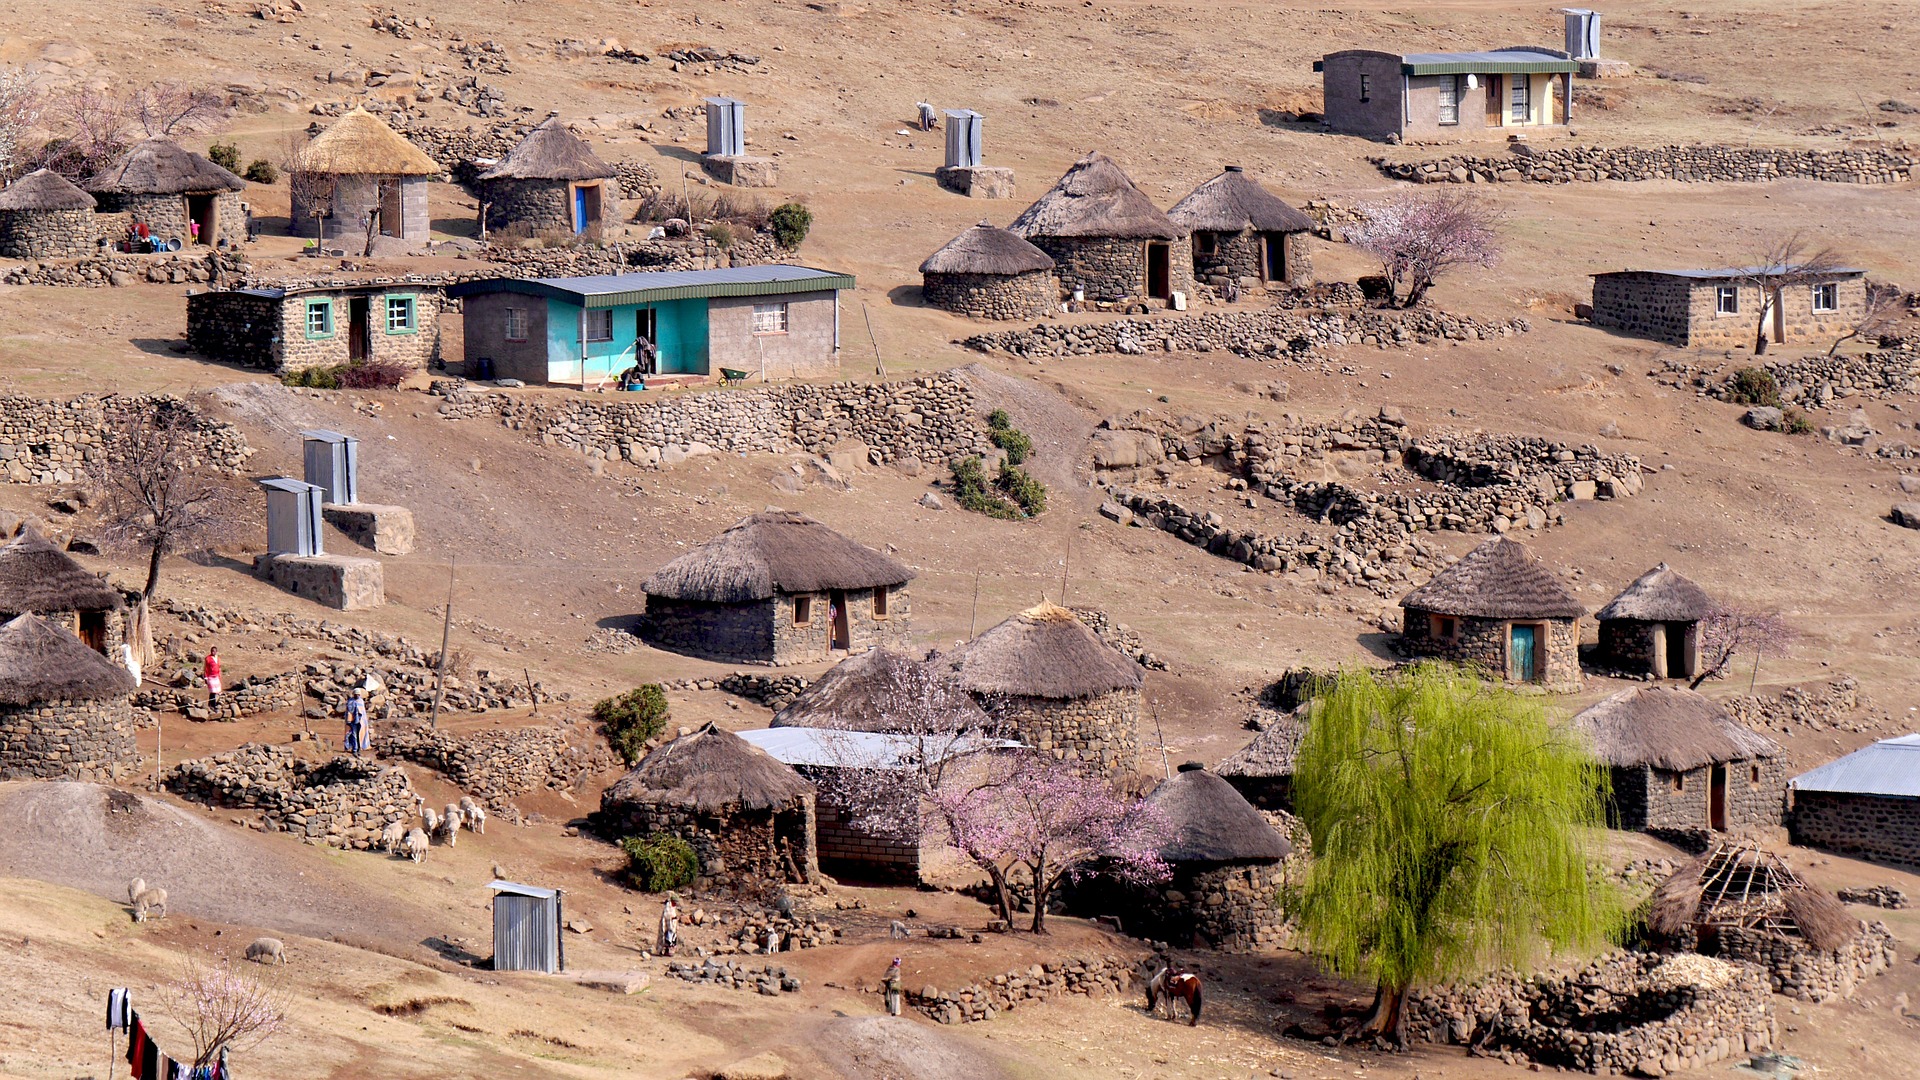 Lesotho Rodavals, originally published in Pixabay CC0